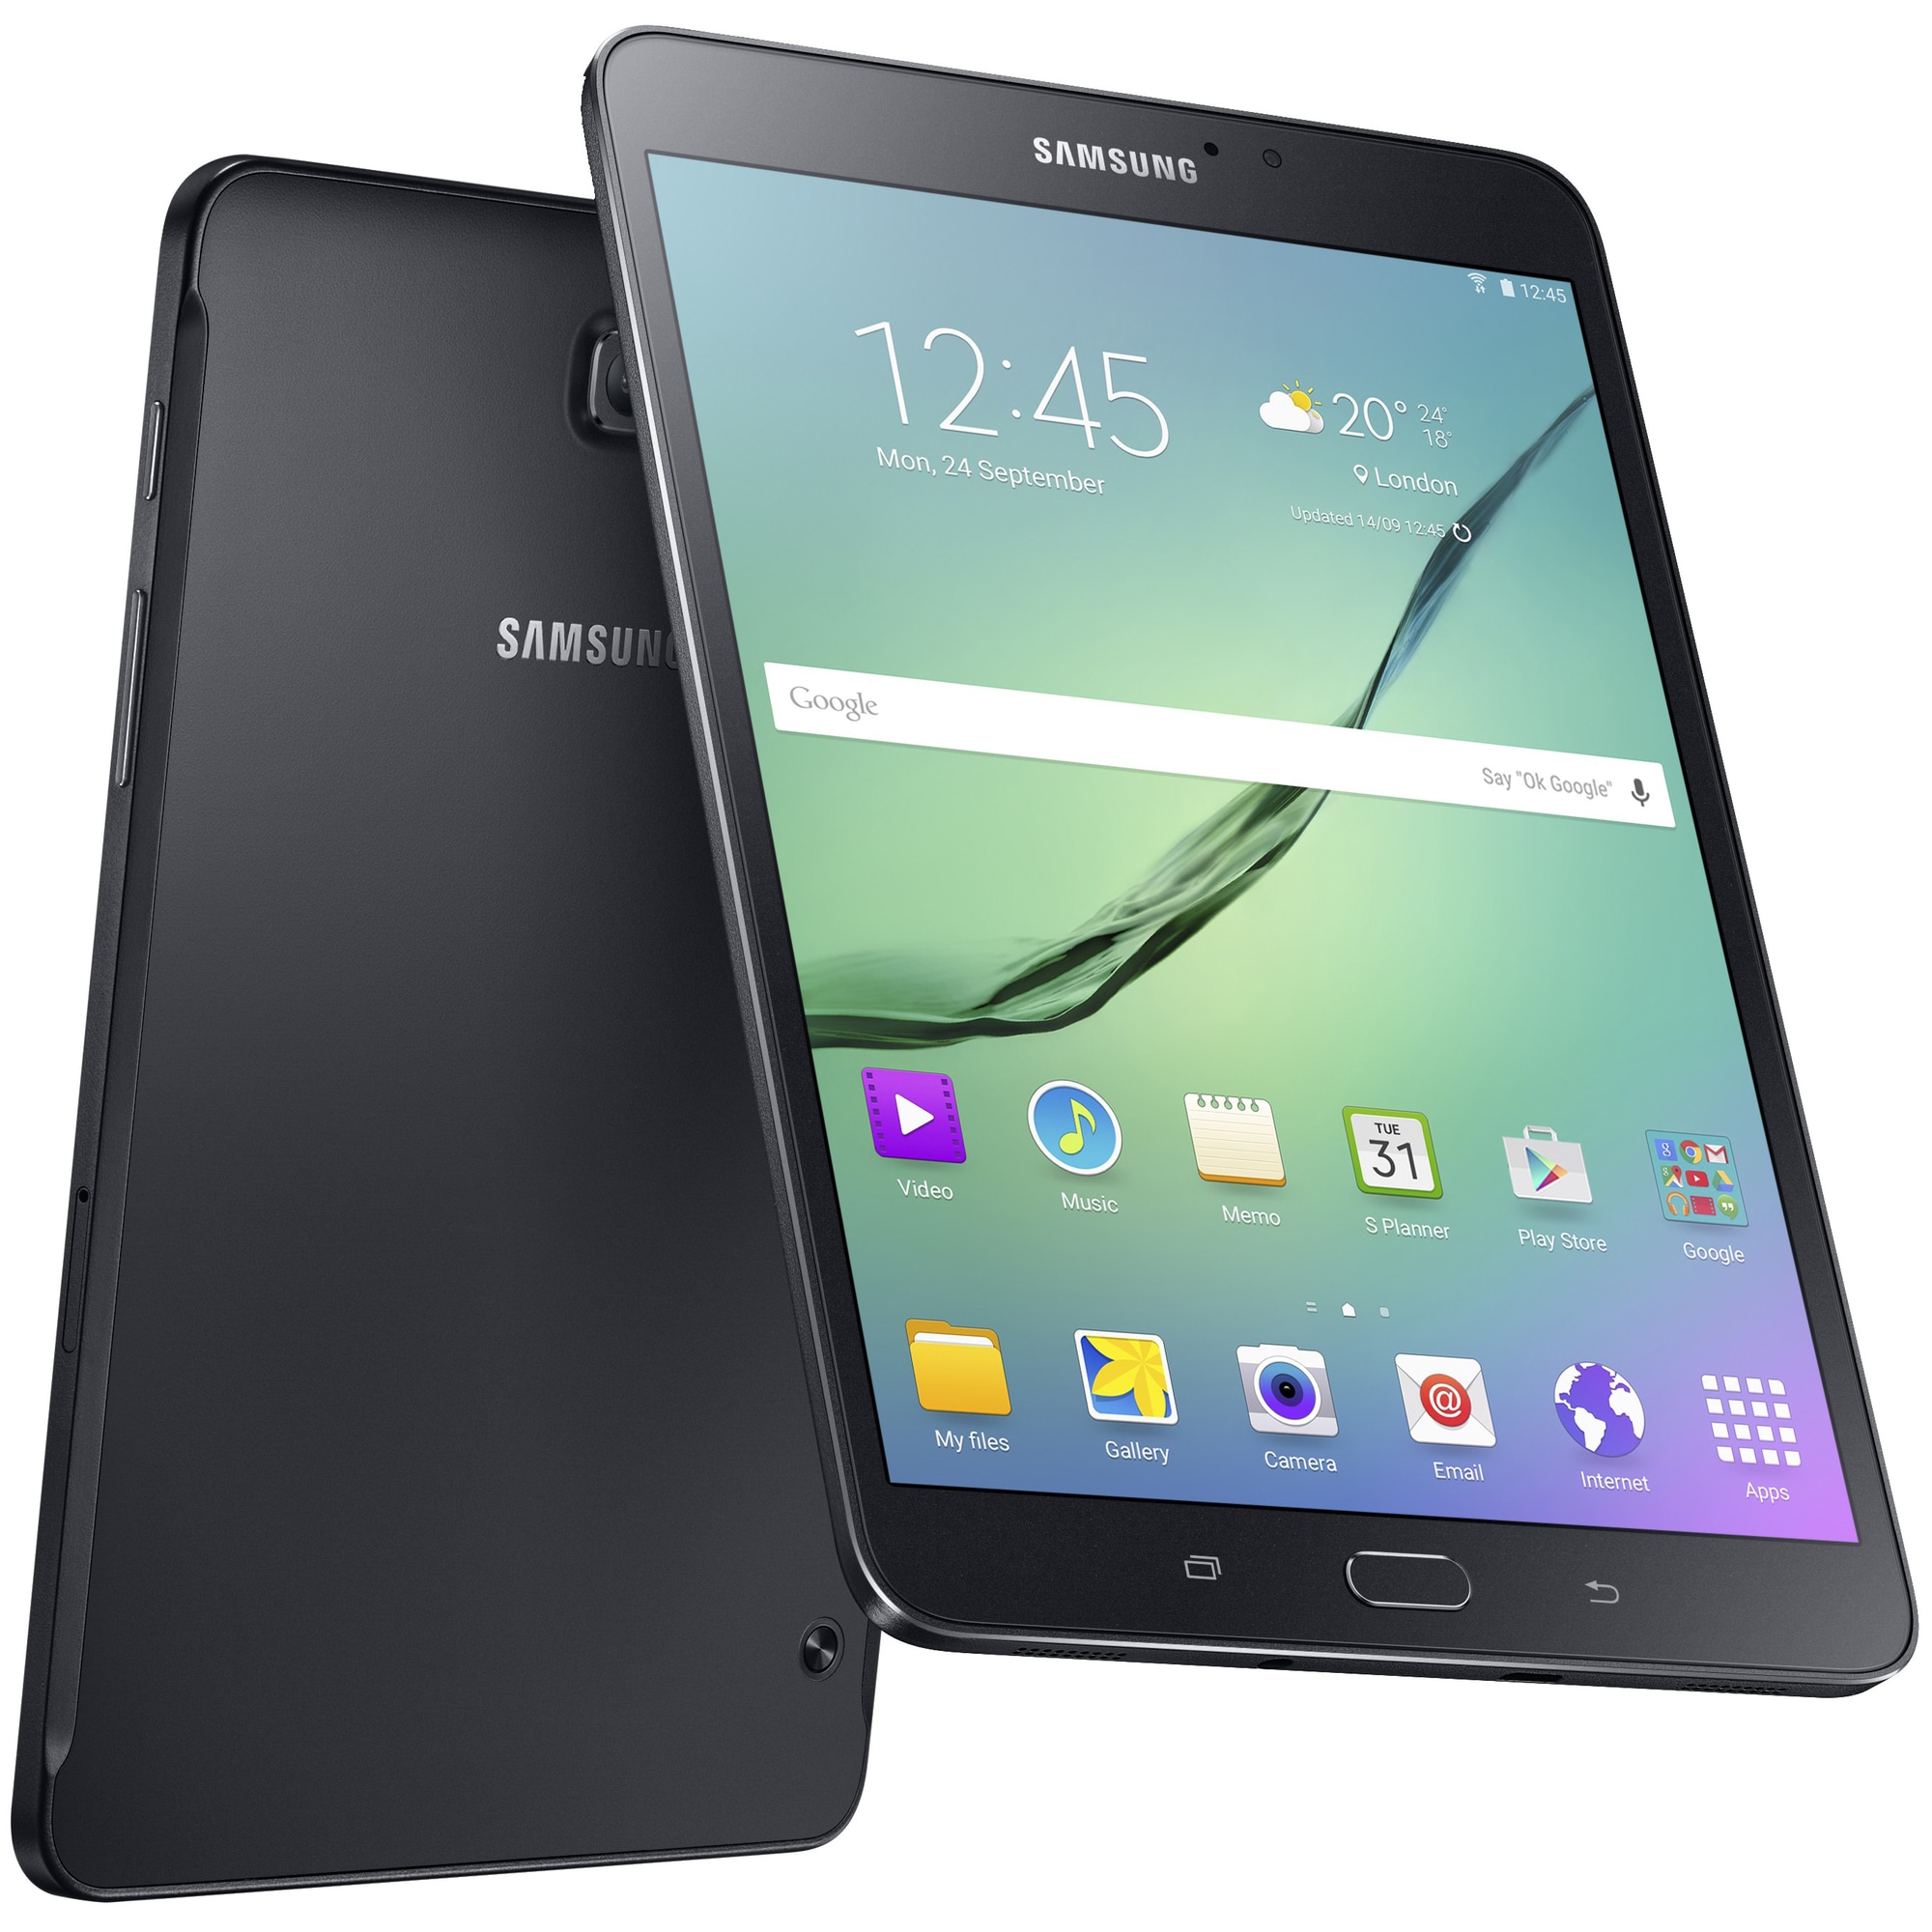 Samsung Galaxy Tab S2 8.0 WiFi 2016 Edition - Sort | Elgiganten